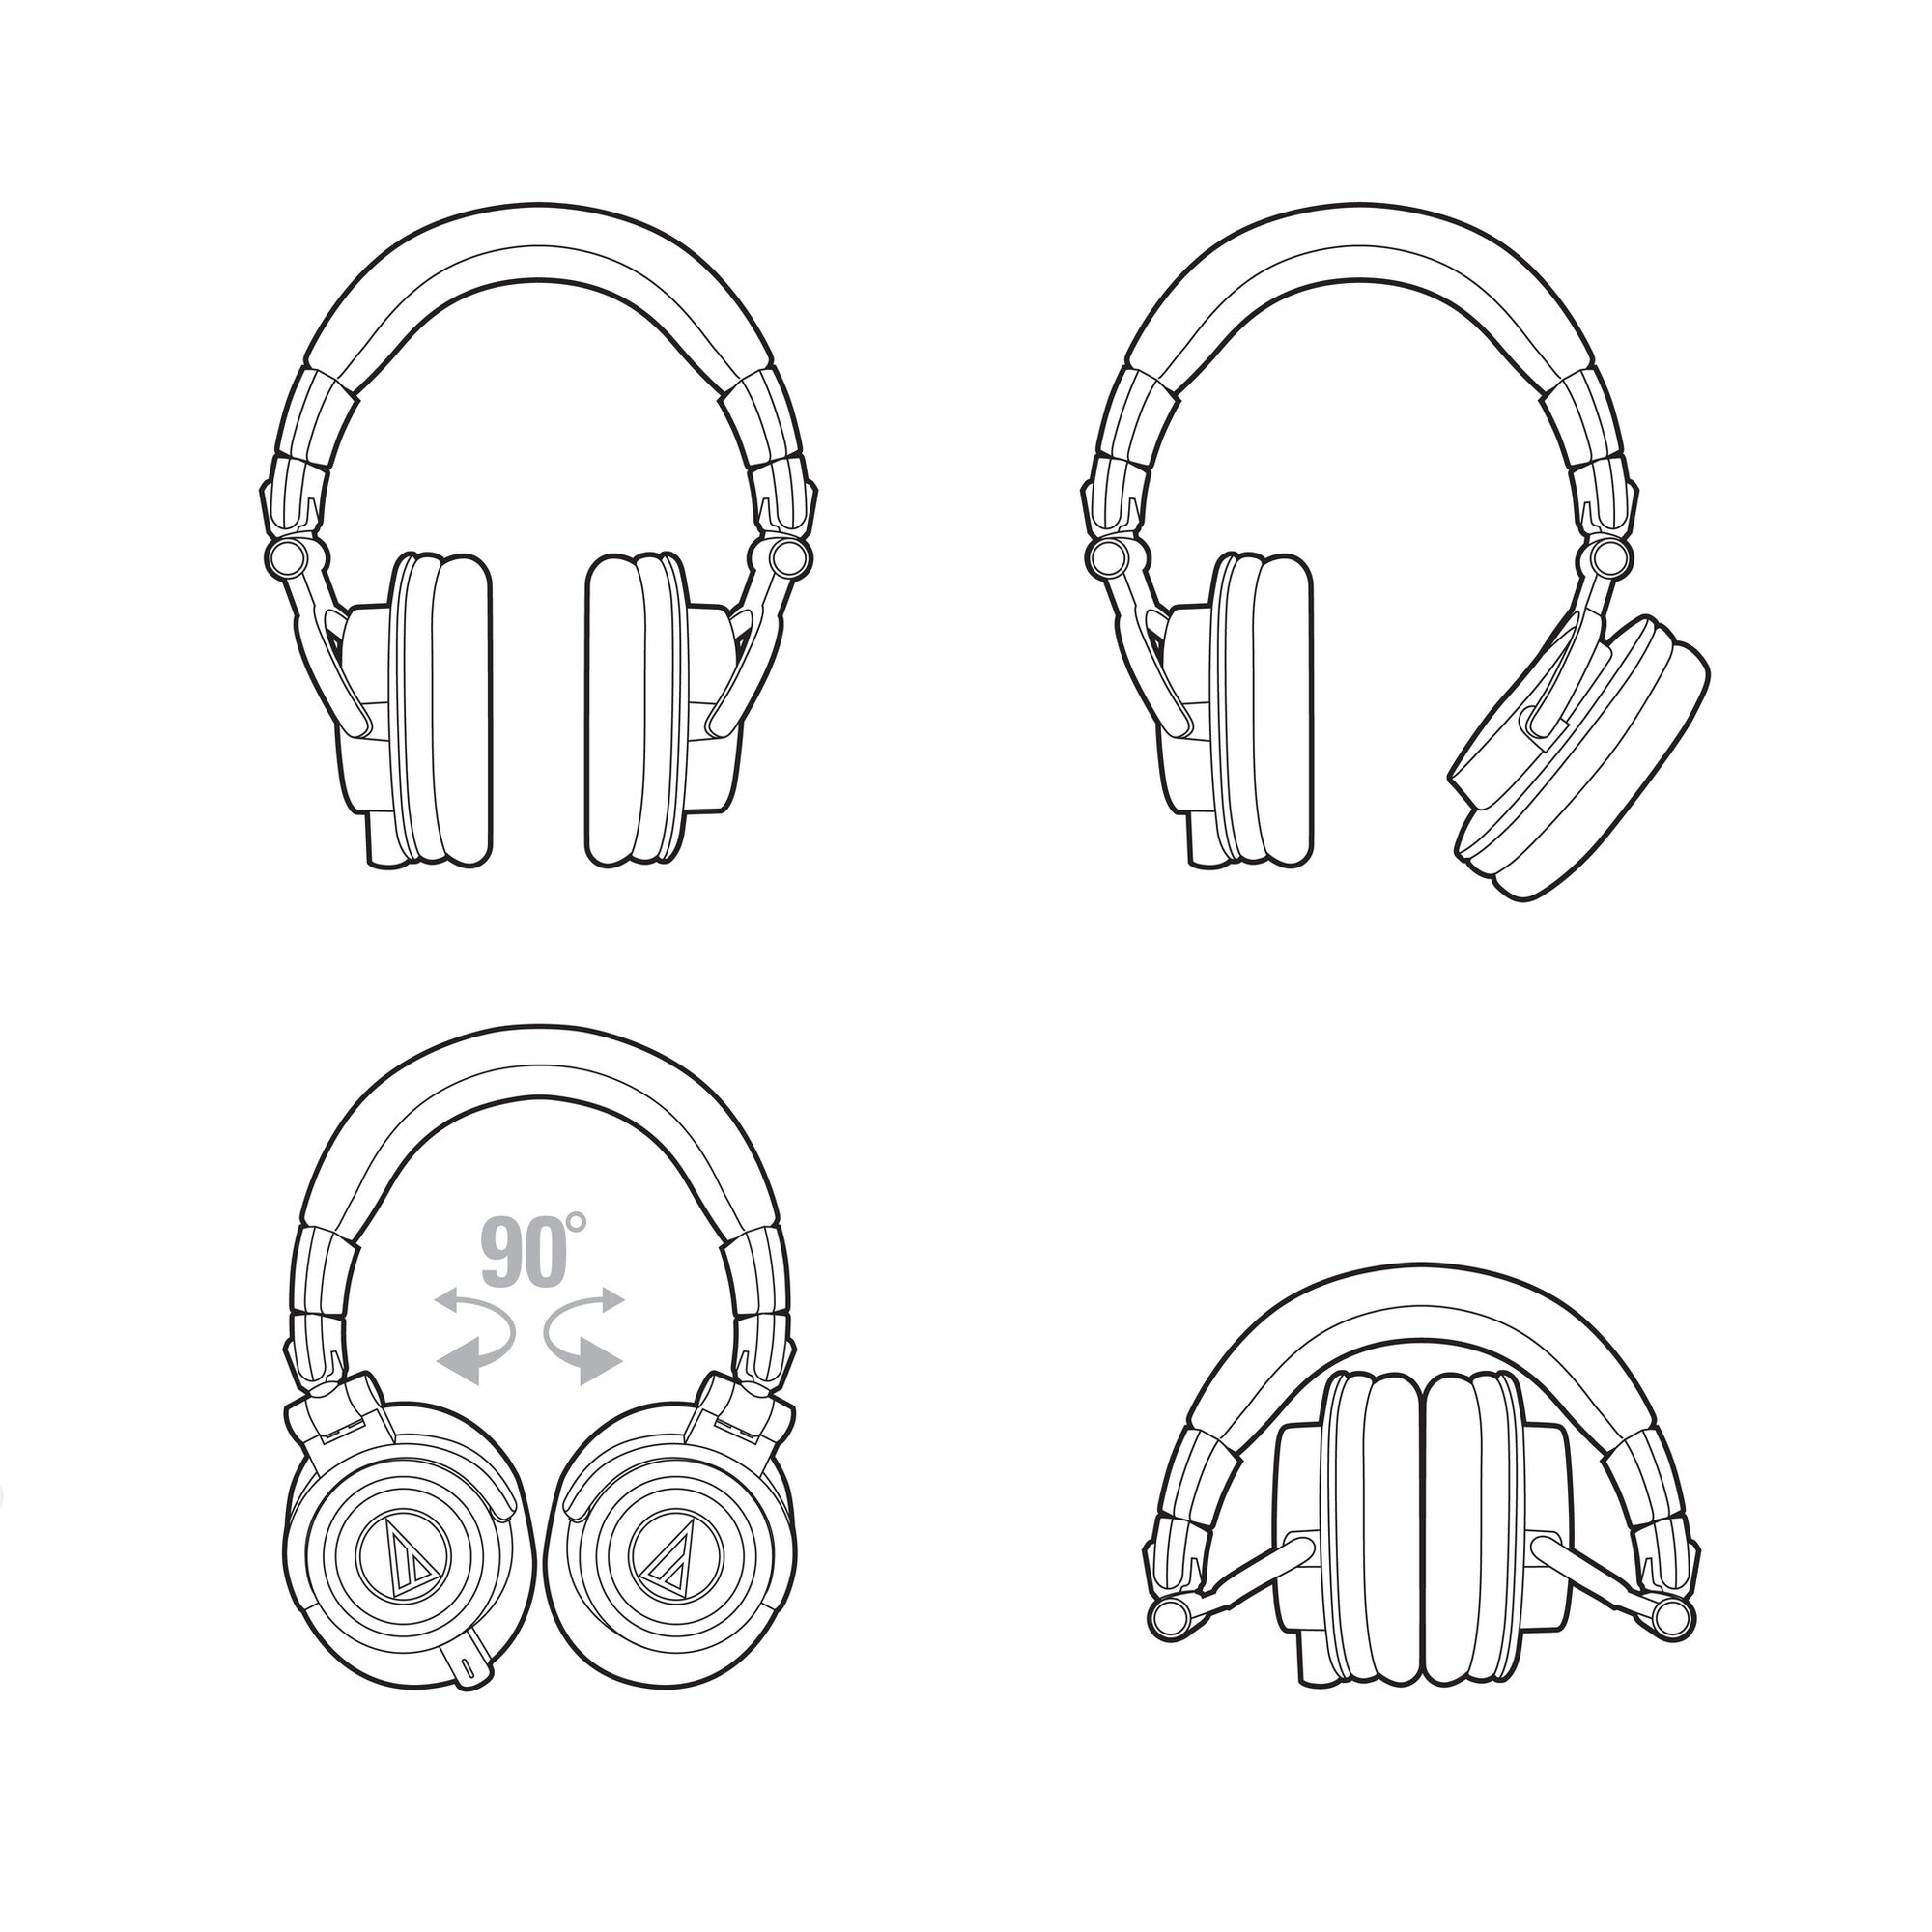 Audio-Technica ATH-M50xWH Closed-back Studio Monitoring Headphones - White